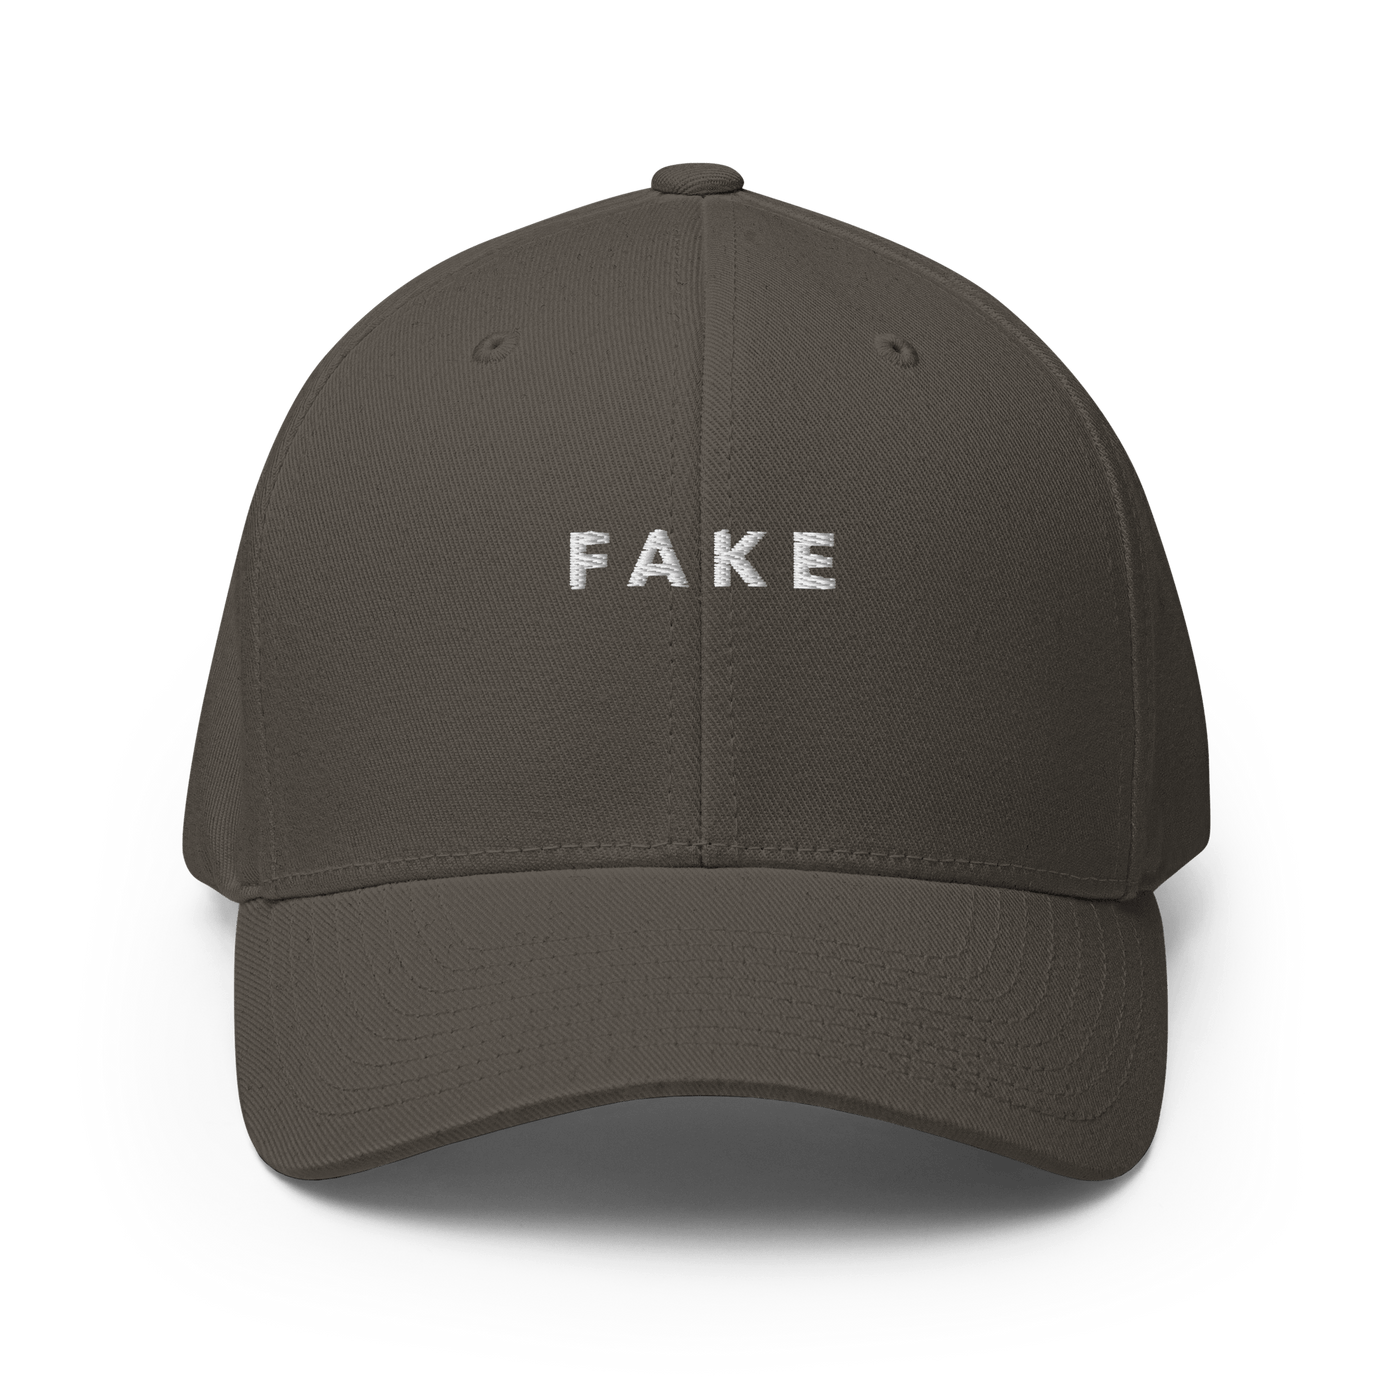 FAKE Flexfit Cap - Dark Grey - S/M - Just Another Cap Store